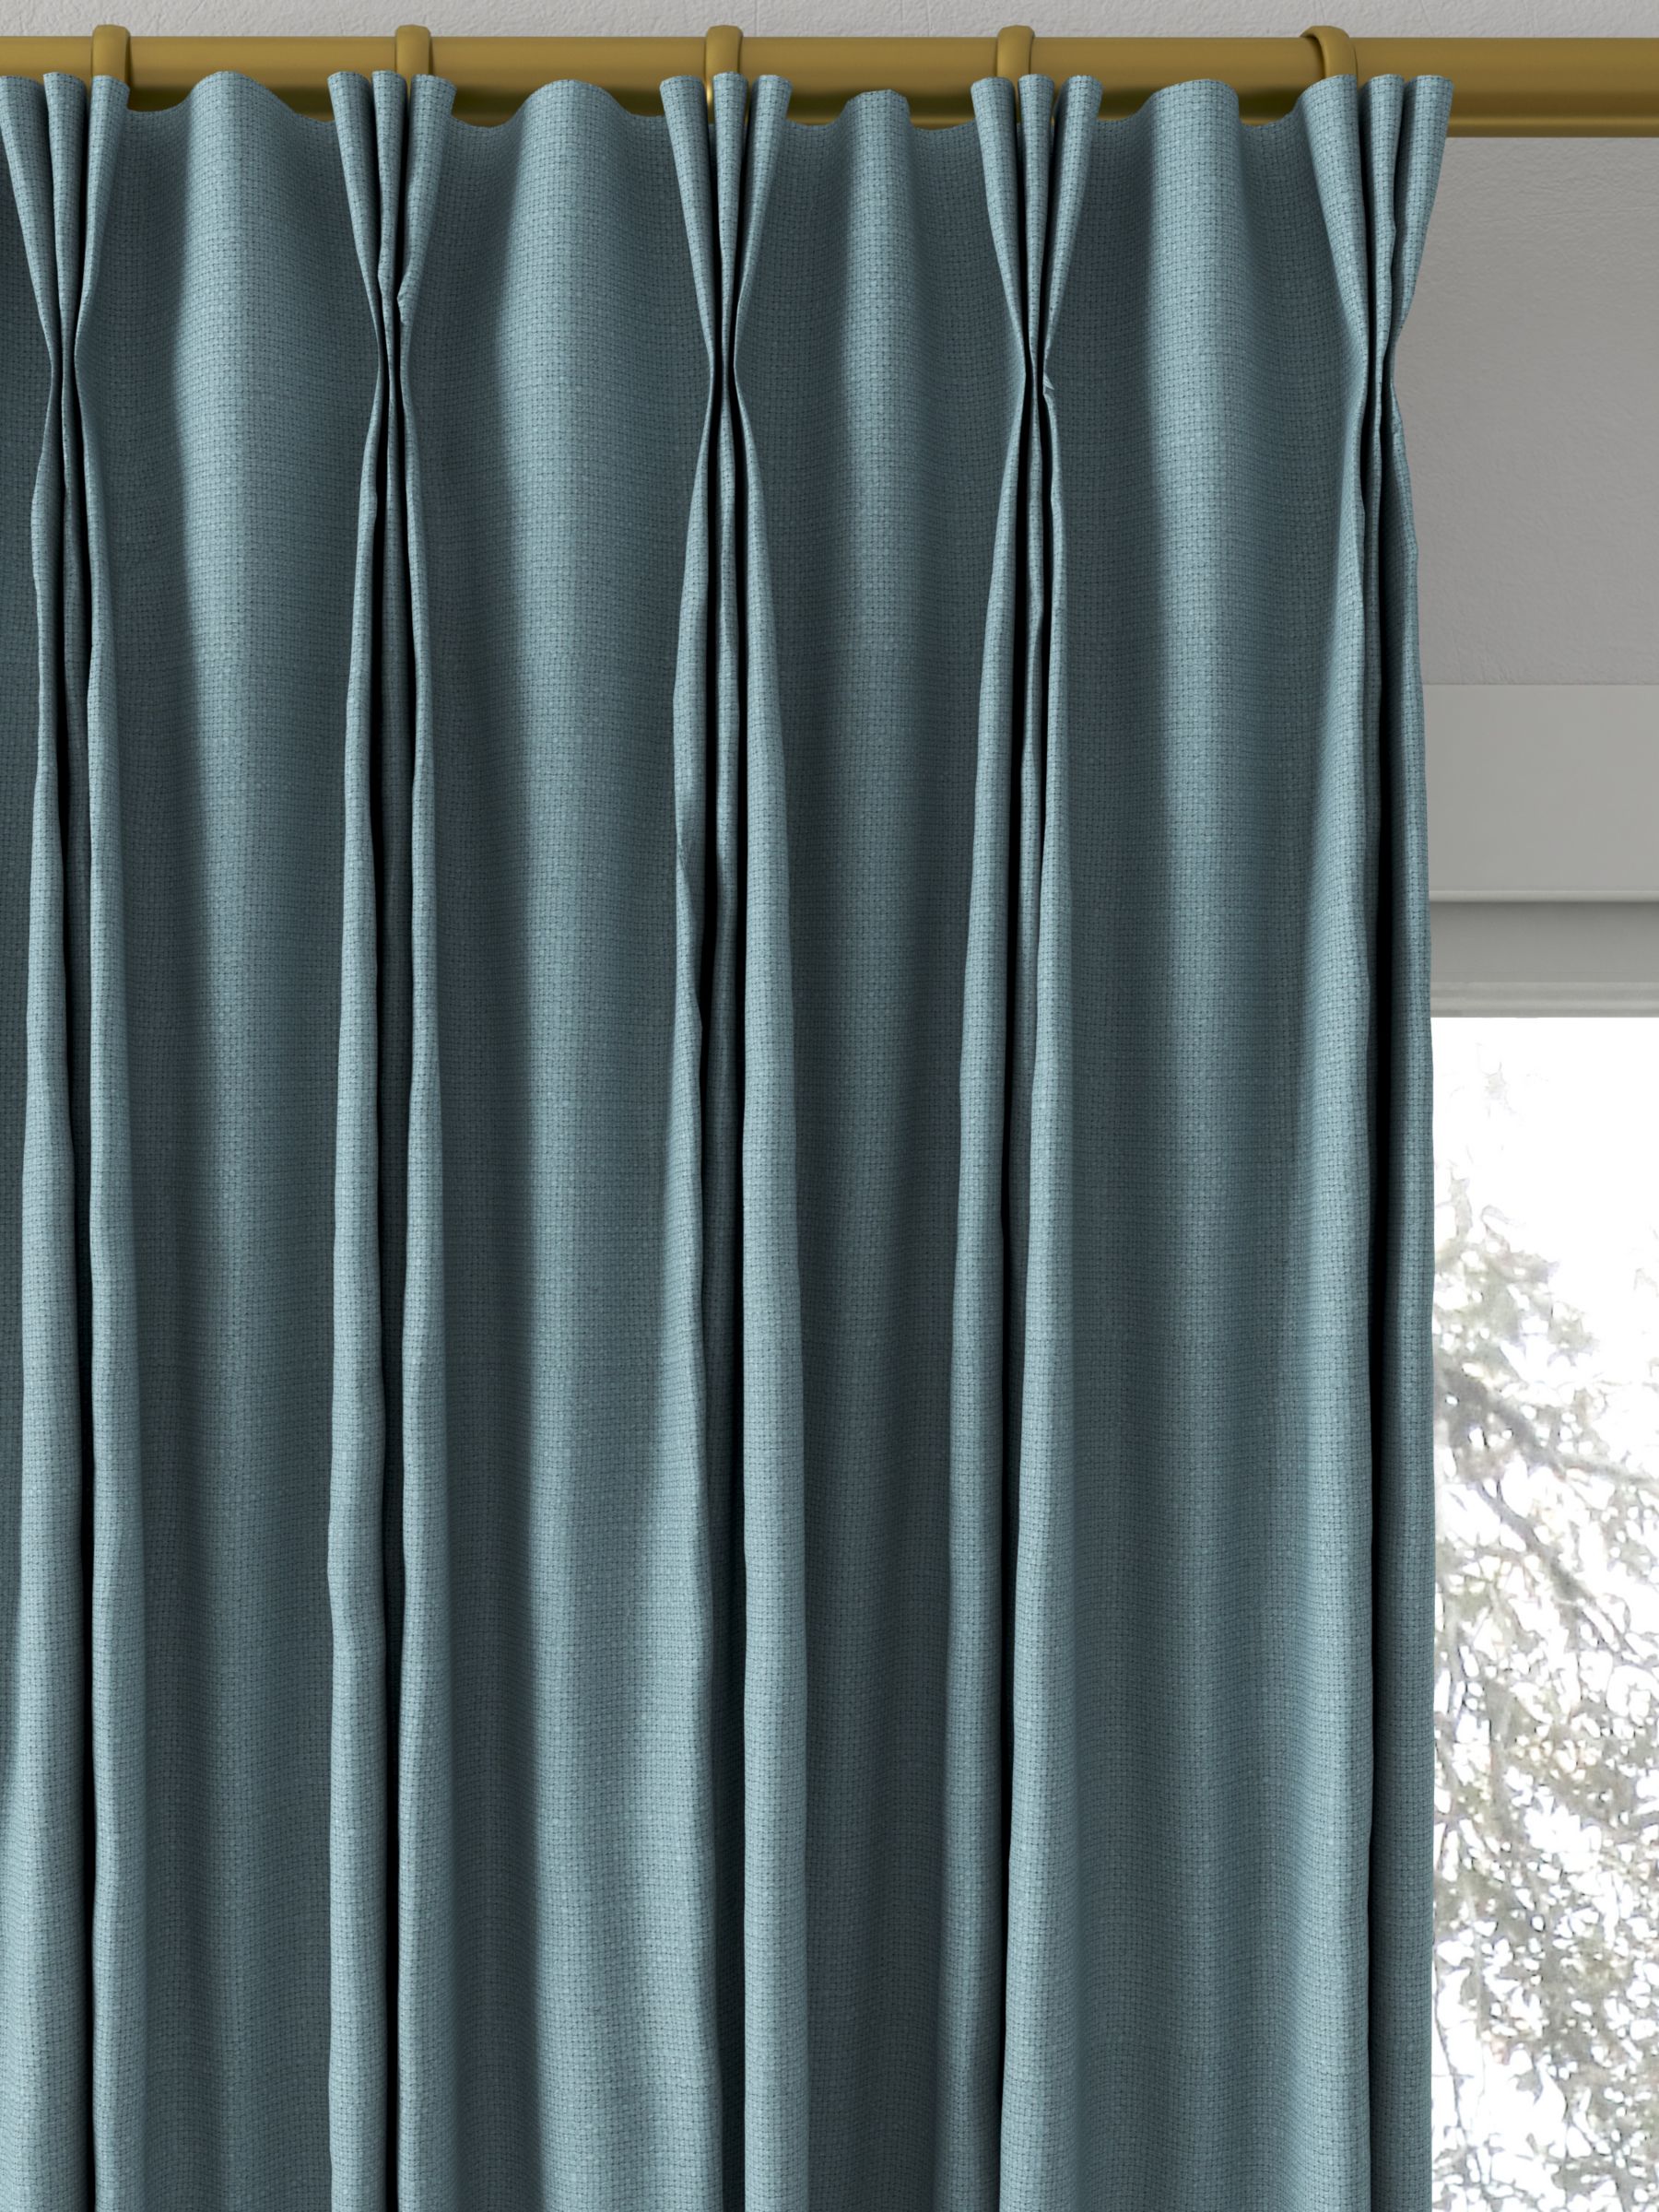 Sanderson Tuscany II Made to Measure Curtains, Aquamarine